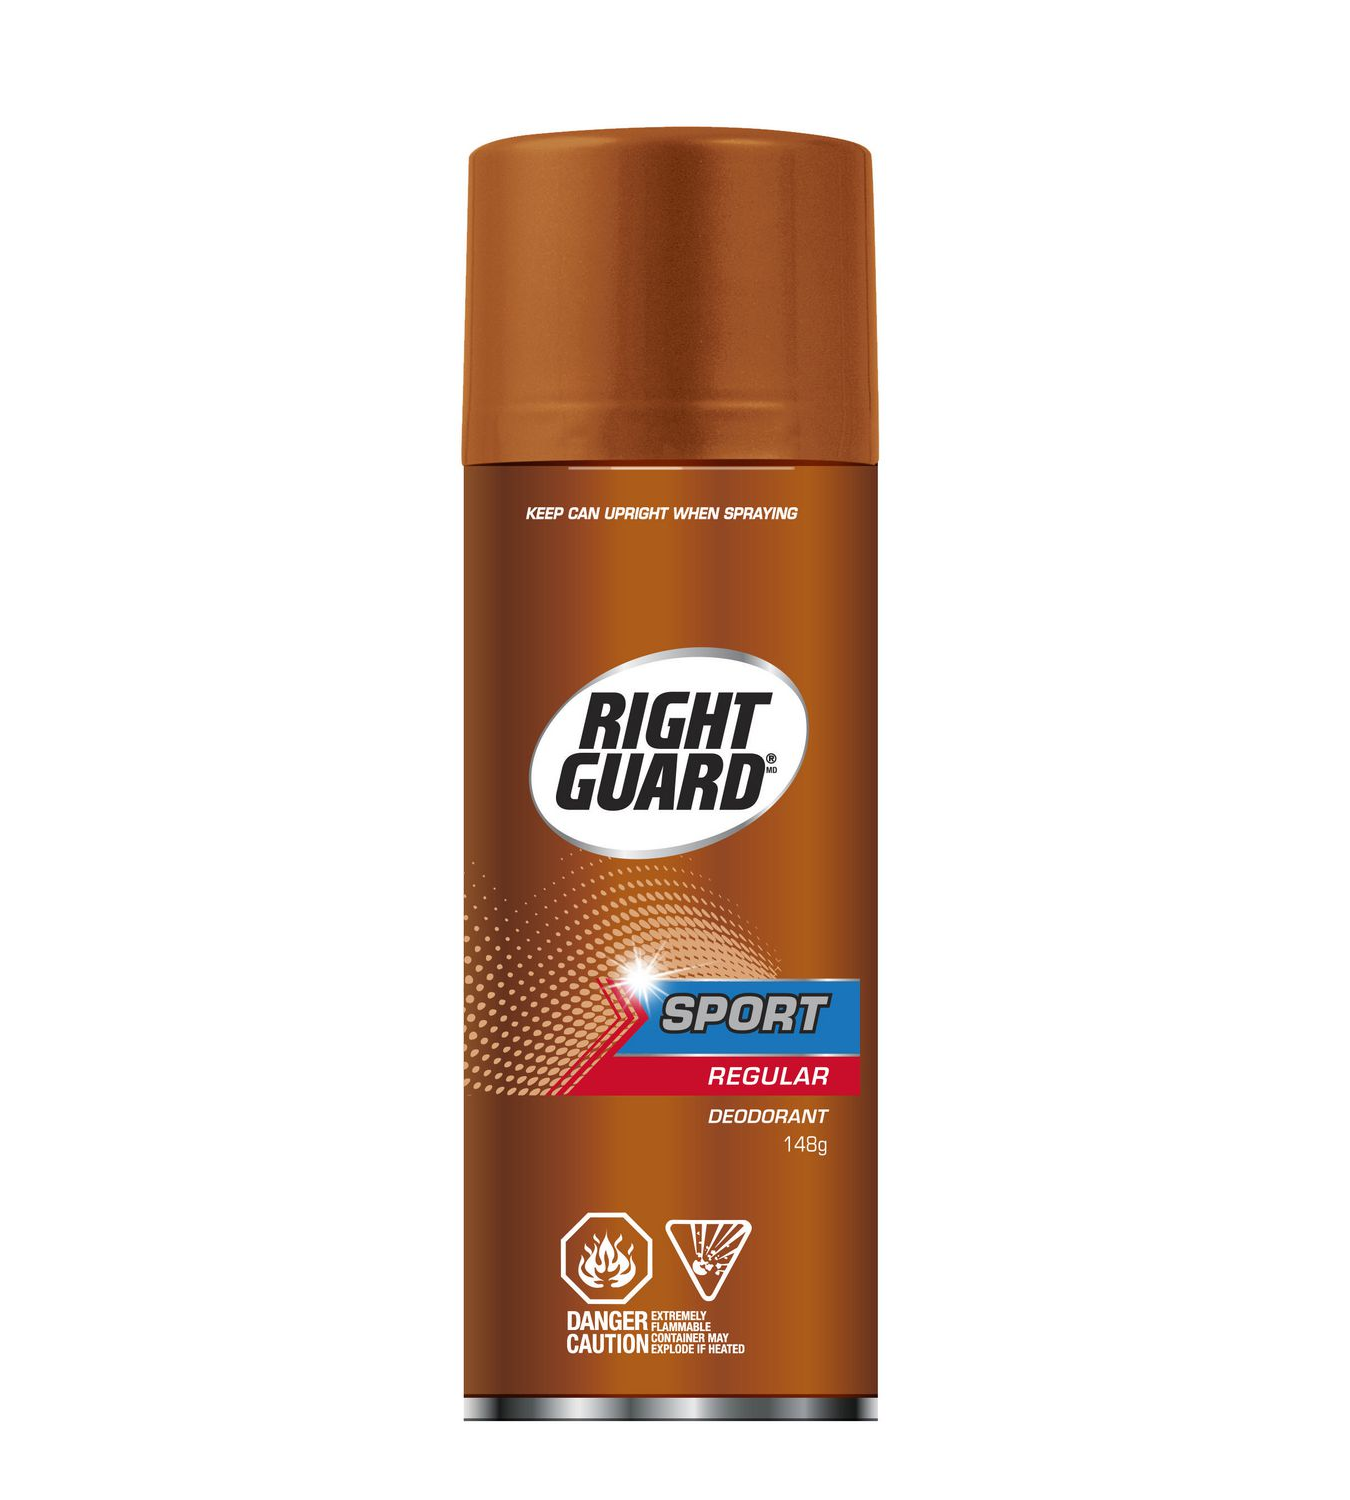 Right Guard Sport Regular Deodorant 148g